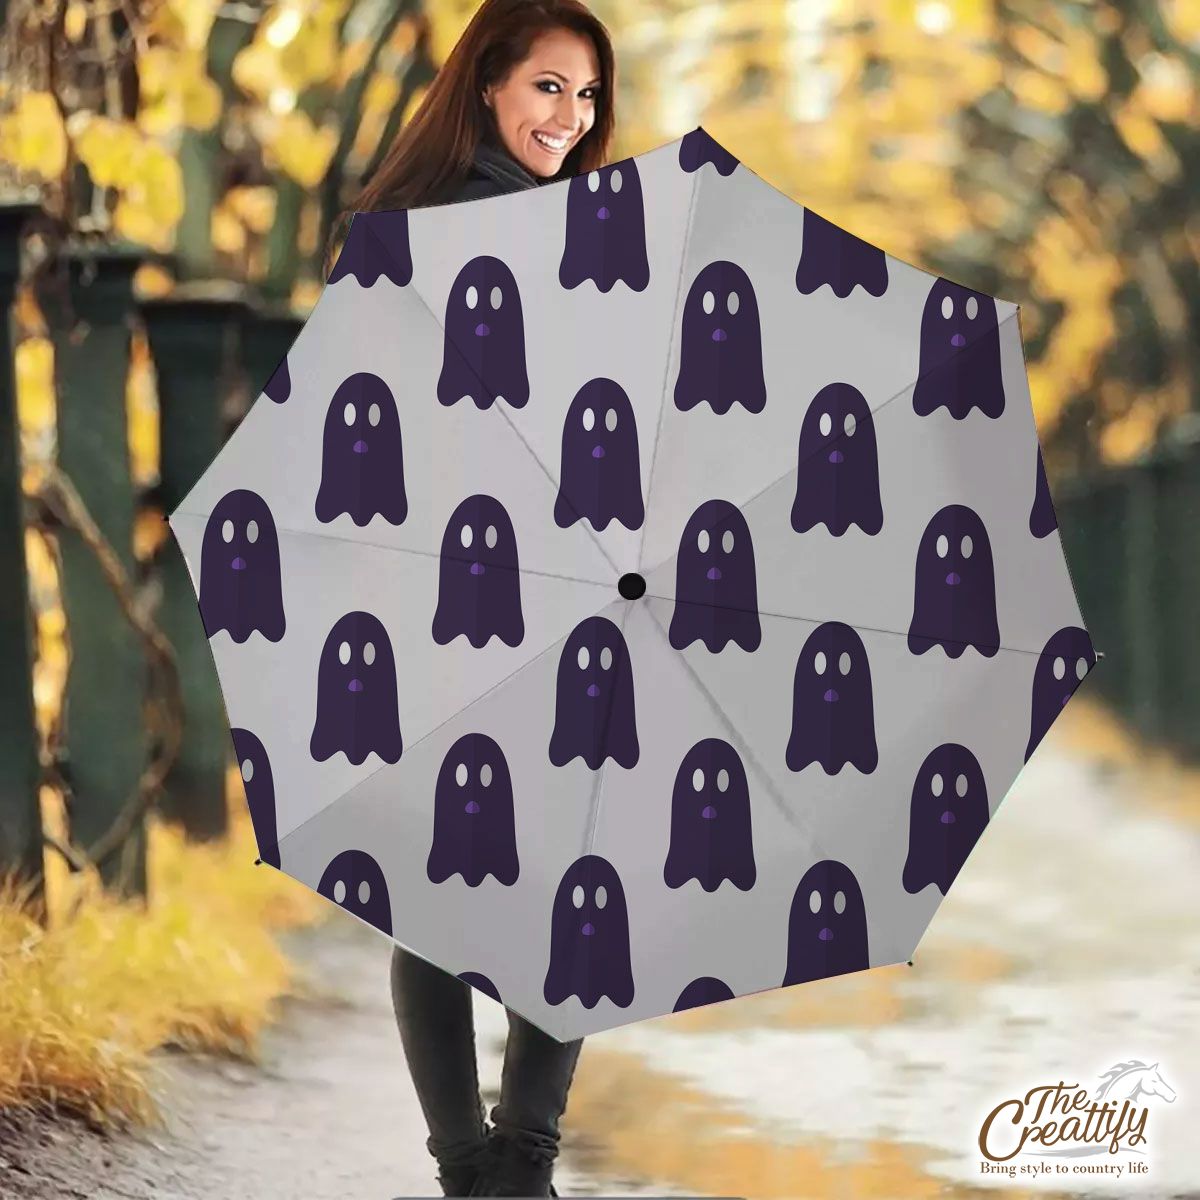 Cute And Funny Purple Boo Ghost Halloween Umbrella